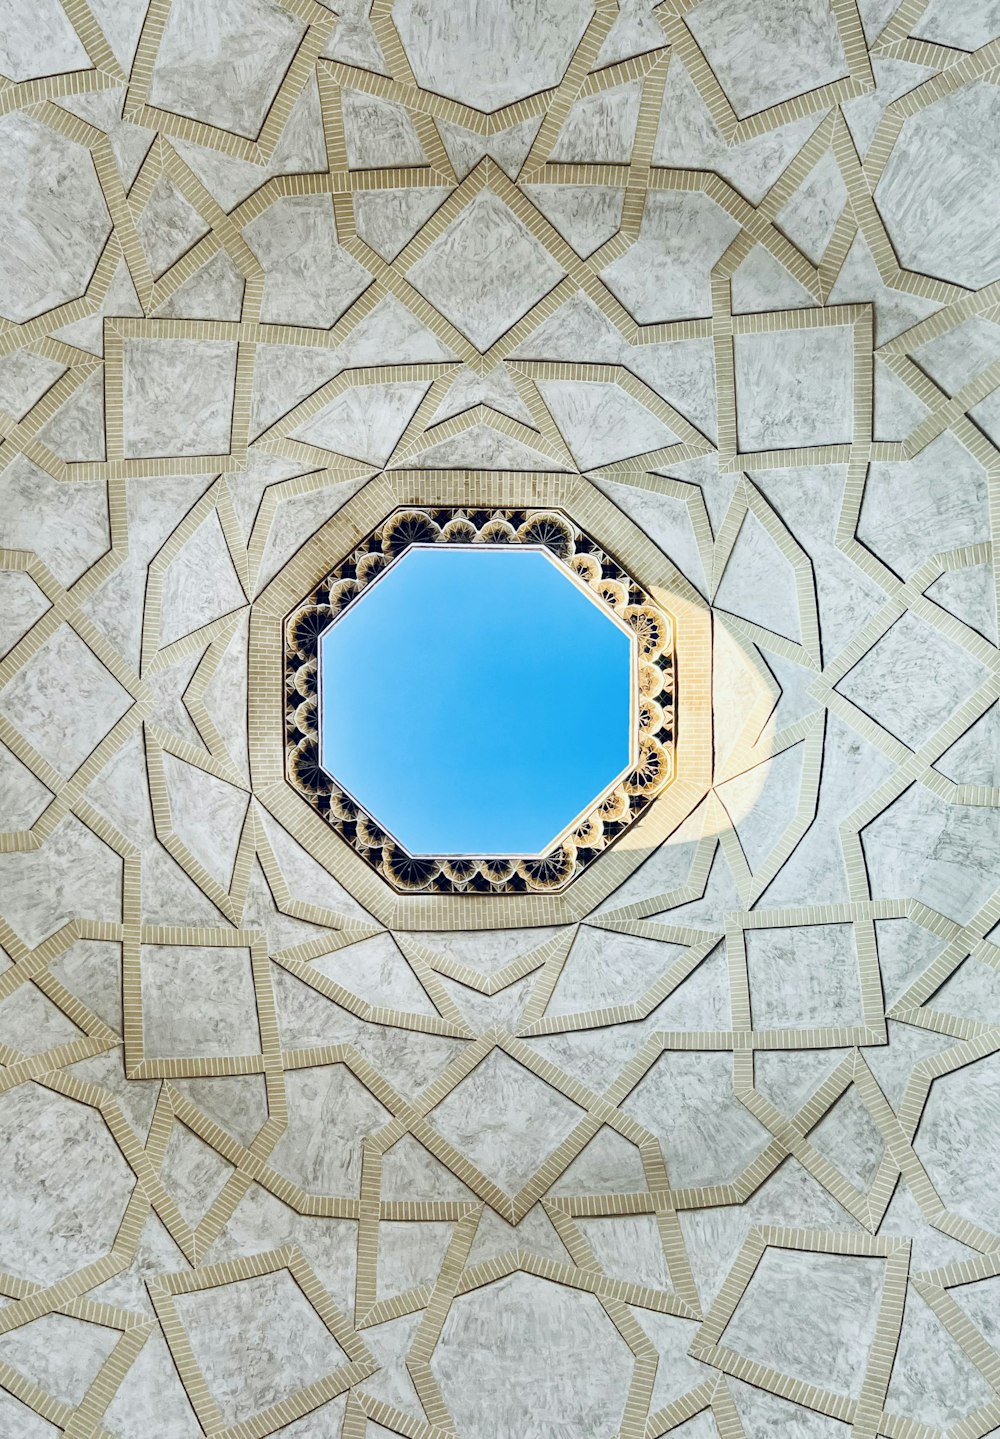 a blue sky is seen through a circular window